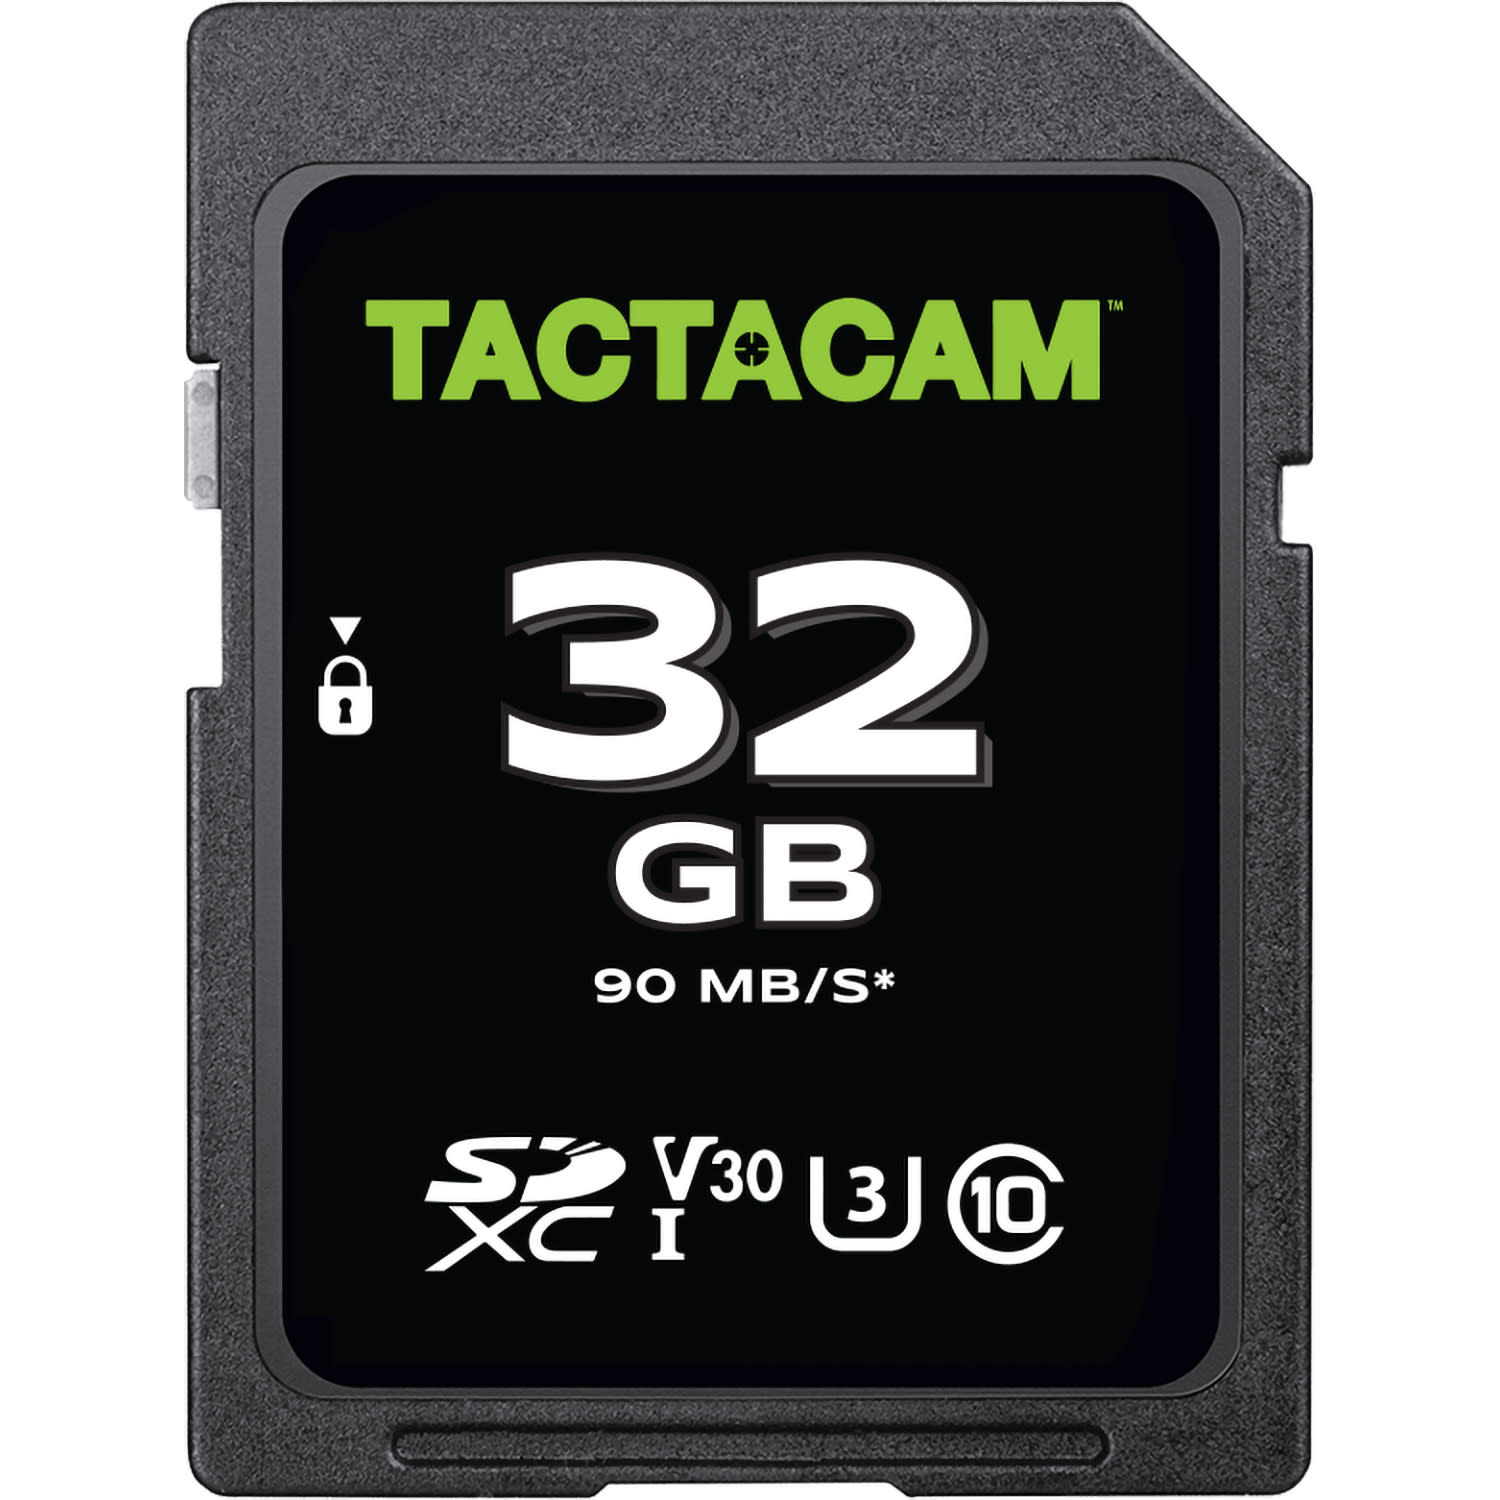 Tactacam® REVEAL Full Size 32 GB SD Card